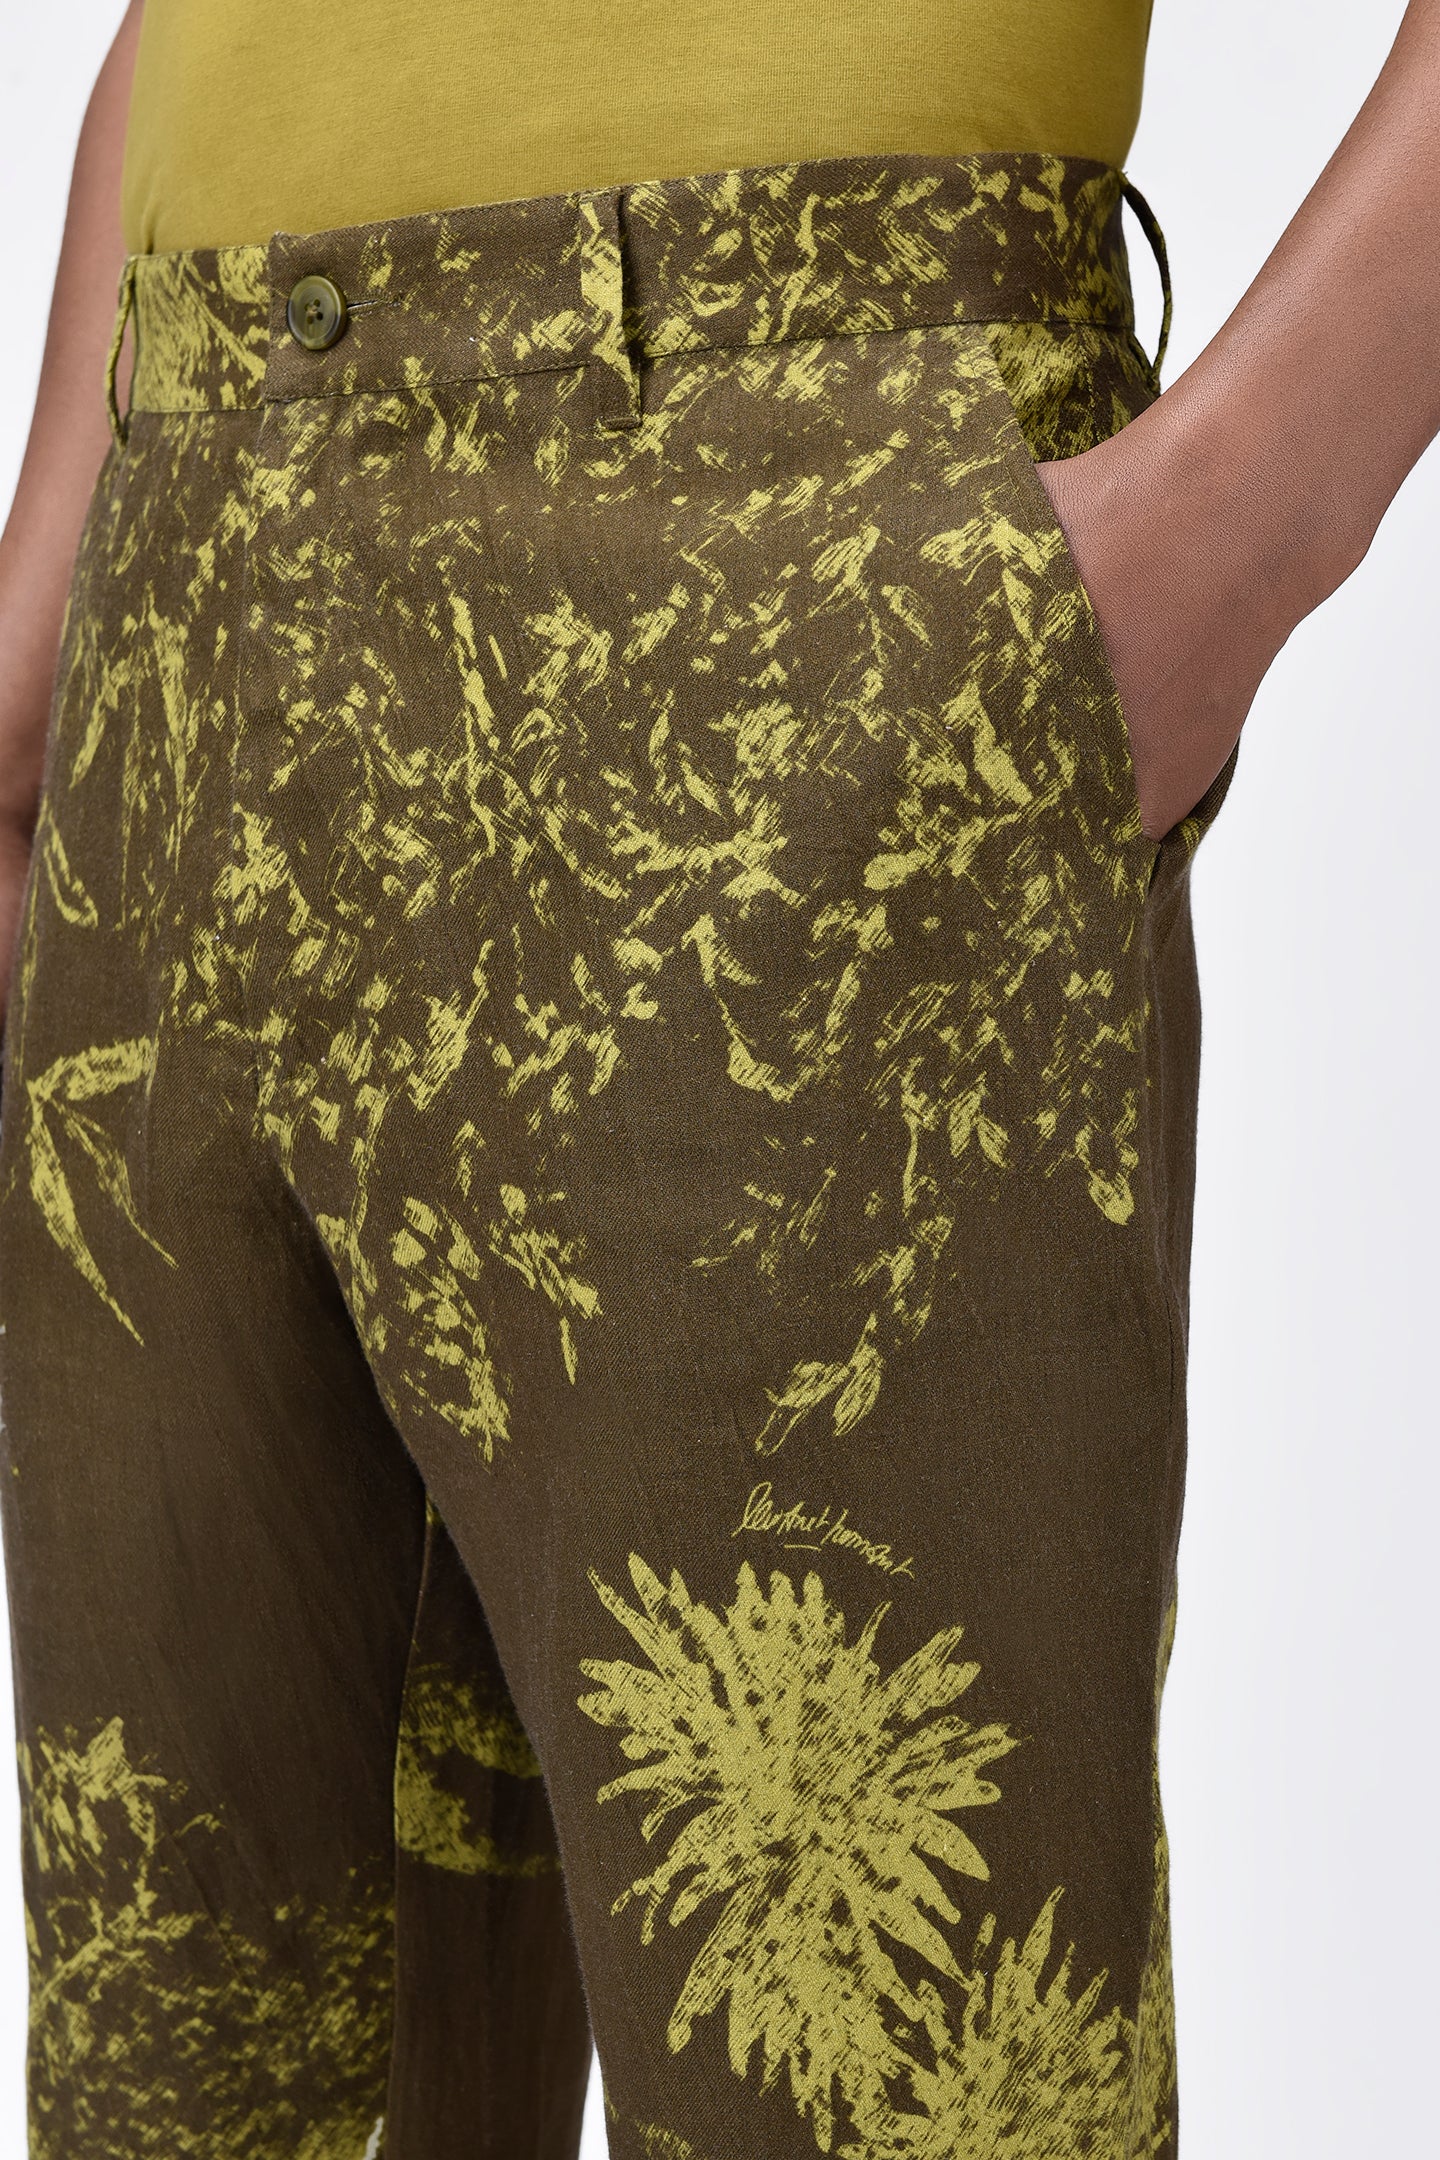 Regular Fit Trouser with Landscape Print